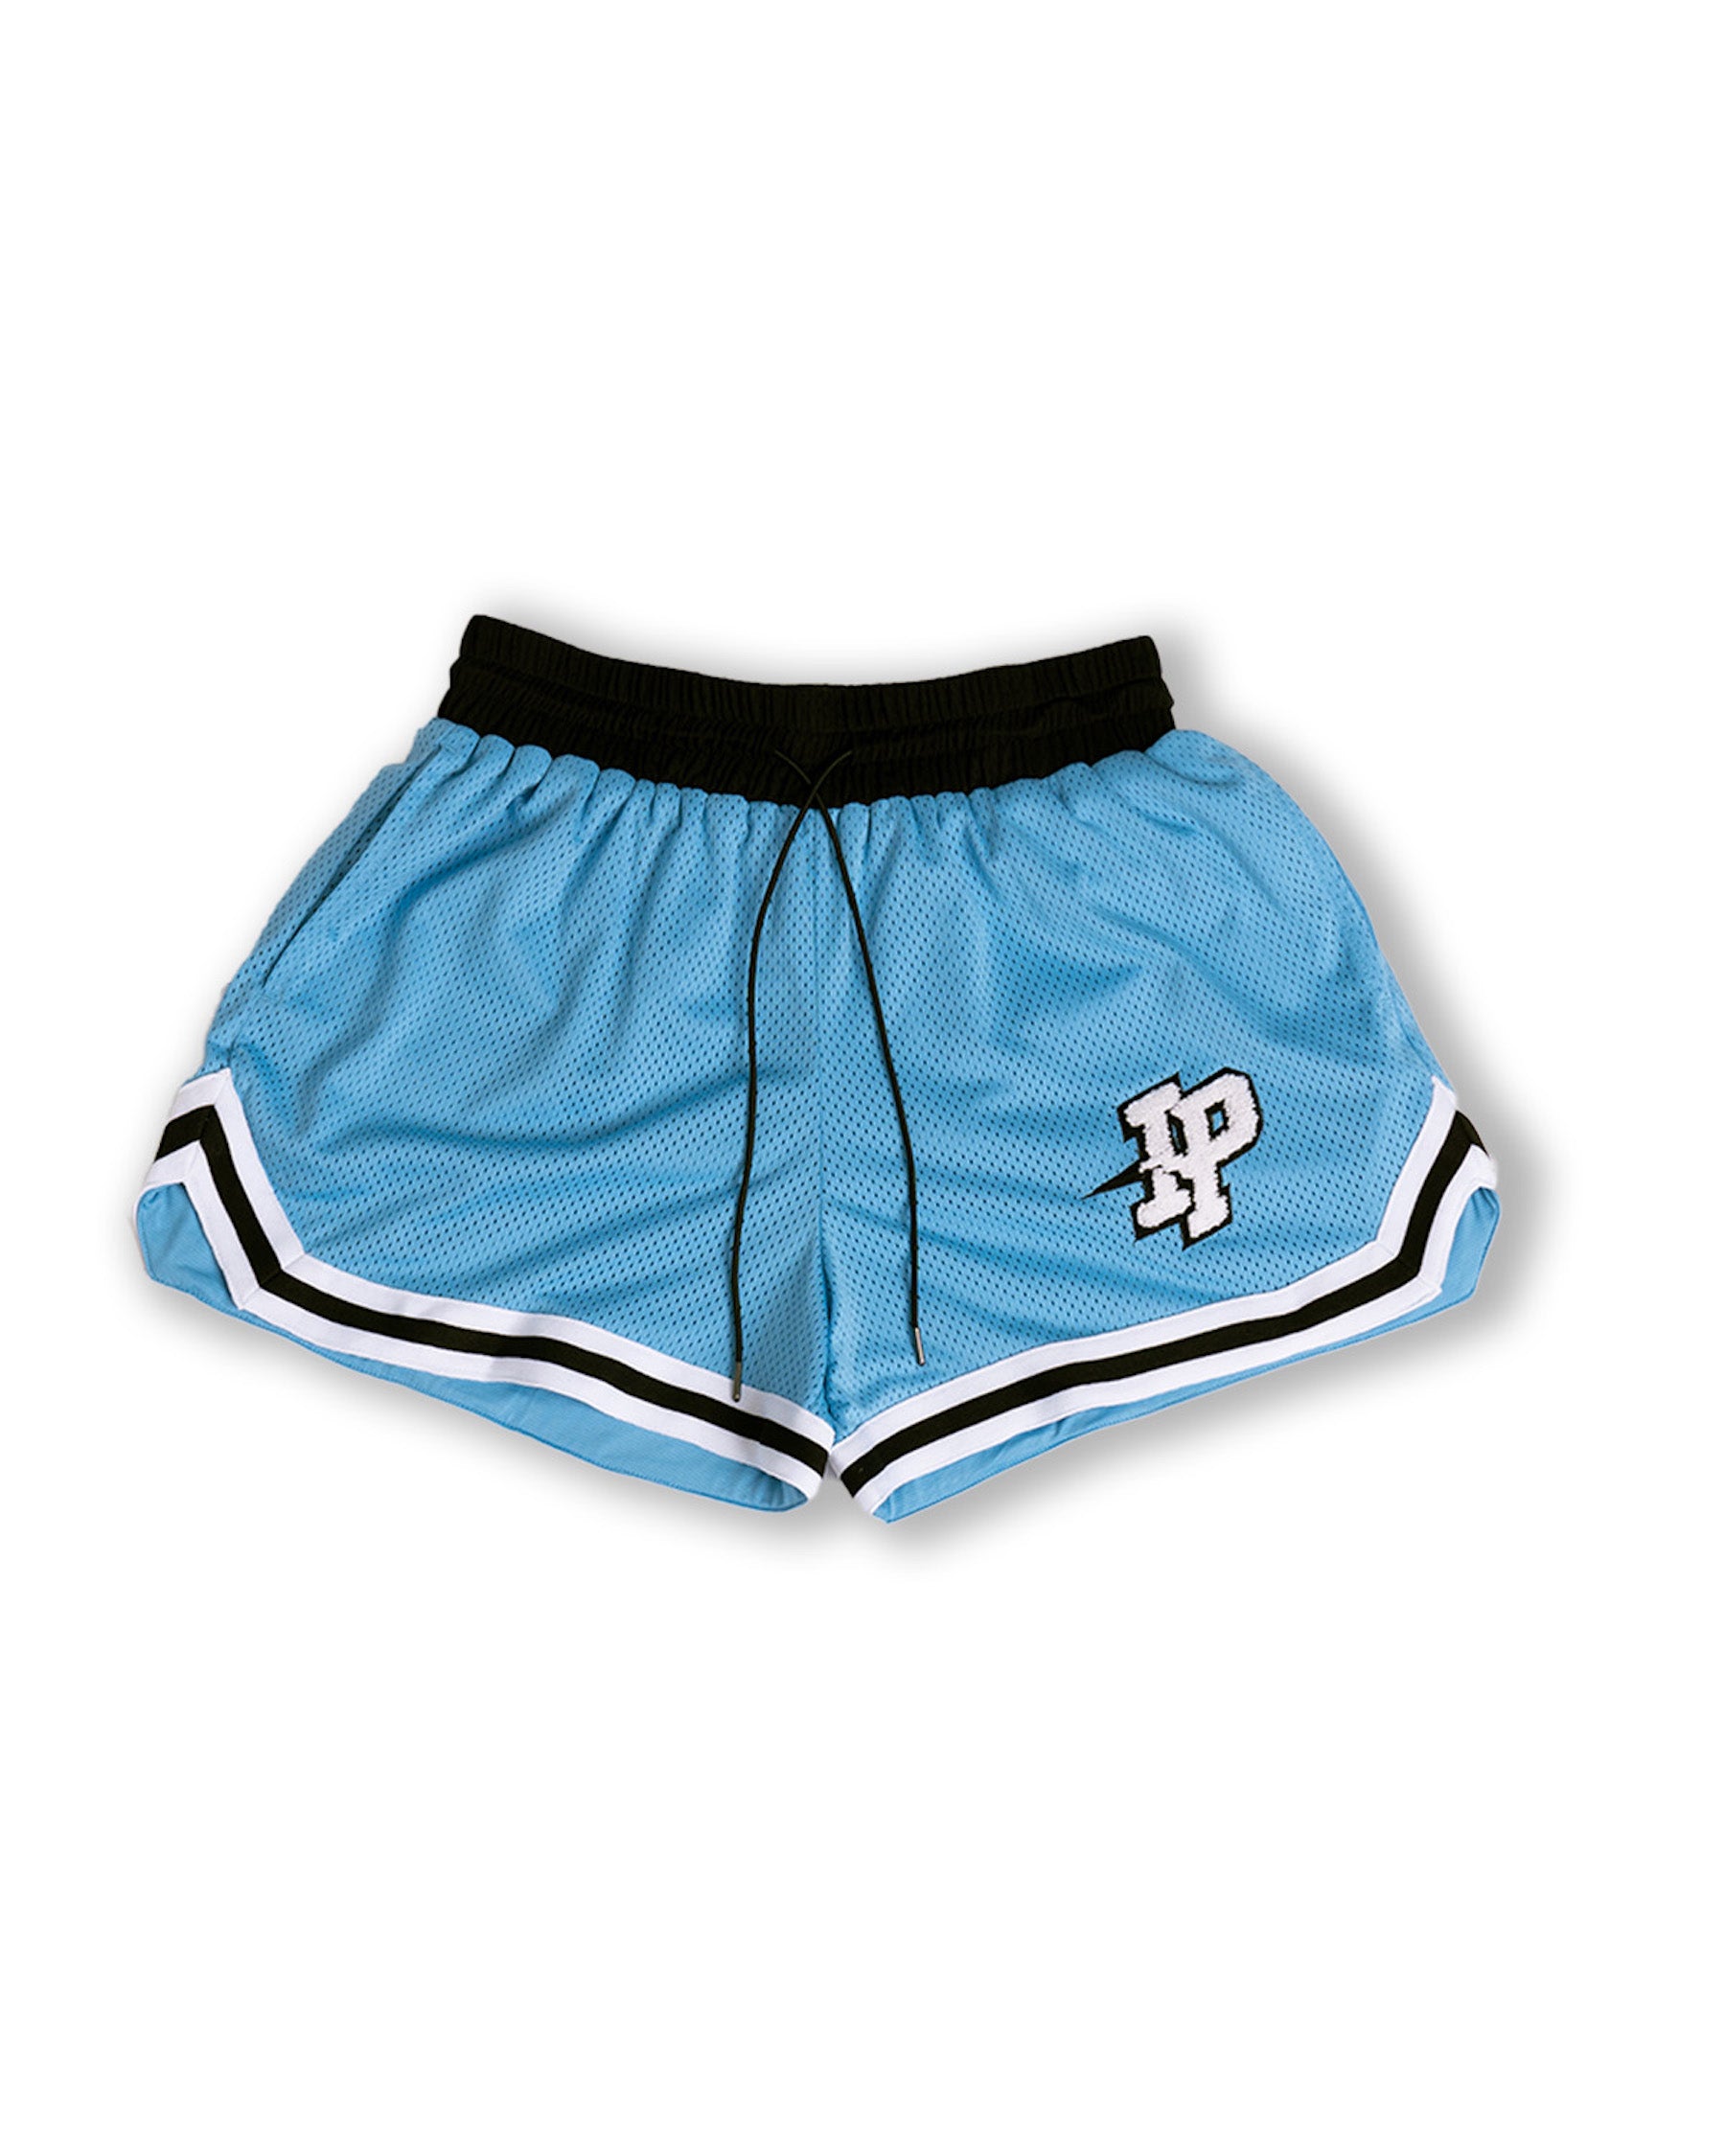 Women's League Mesh Shorts - Retro Blue